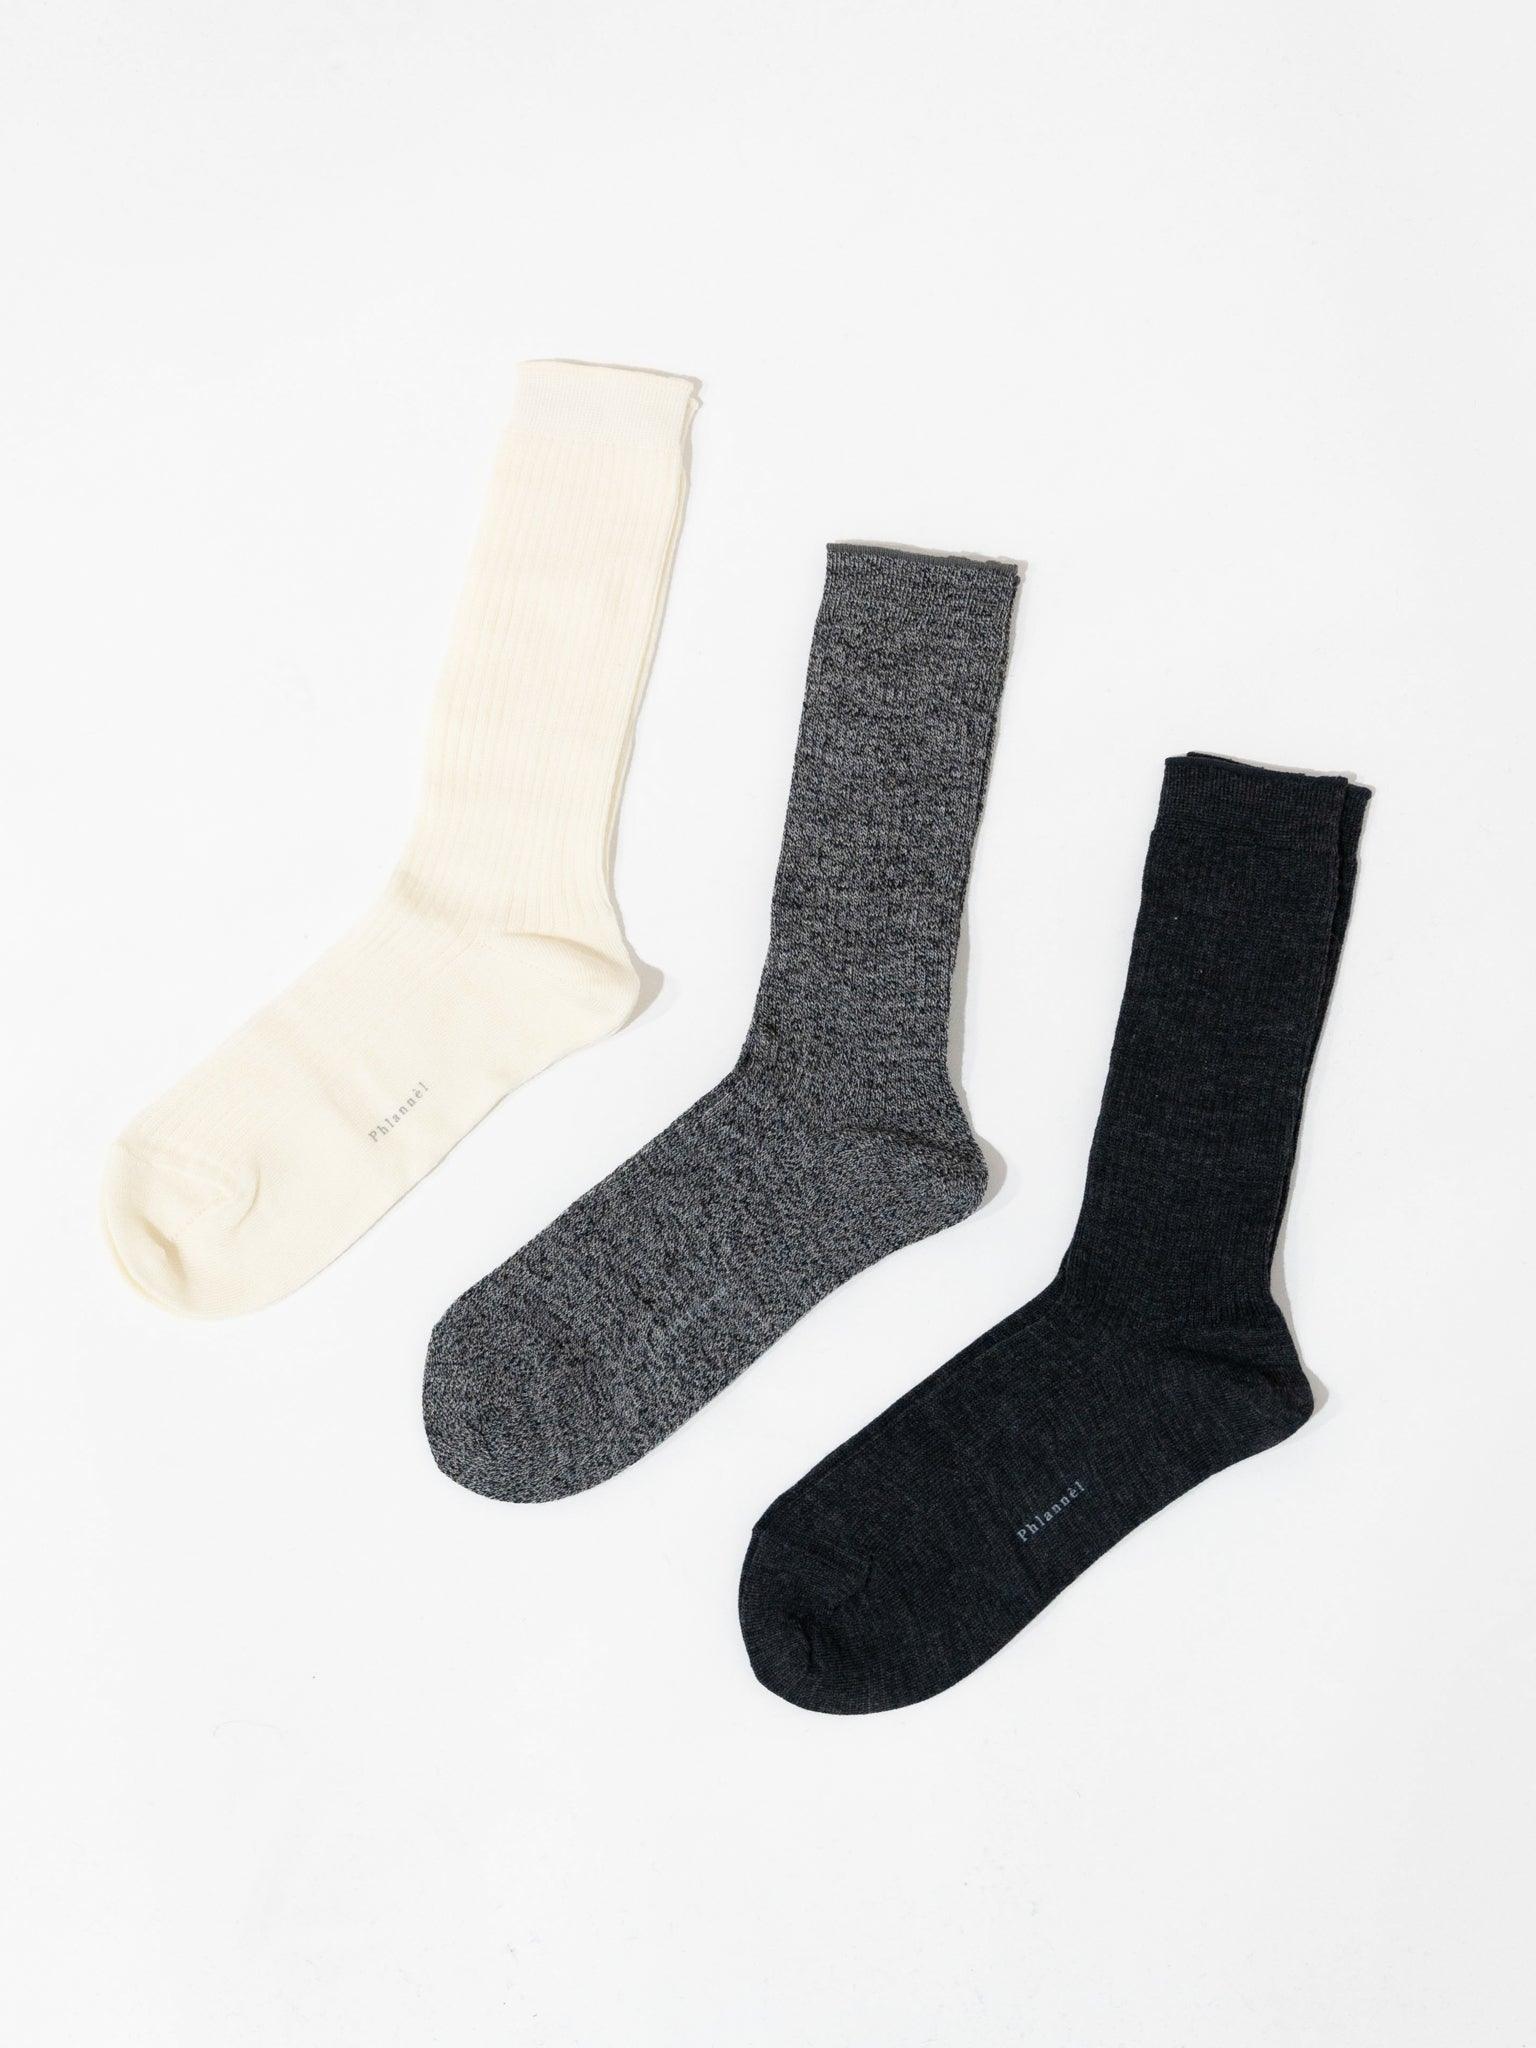 Namu Shop - Phlannel Three Pack Wool Socks (Men’s)